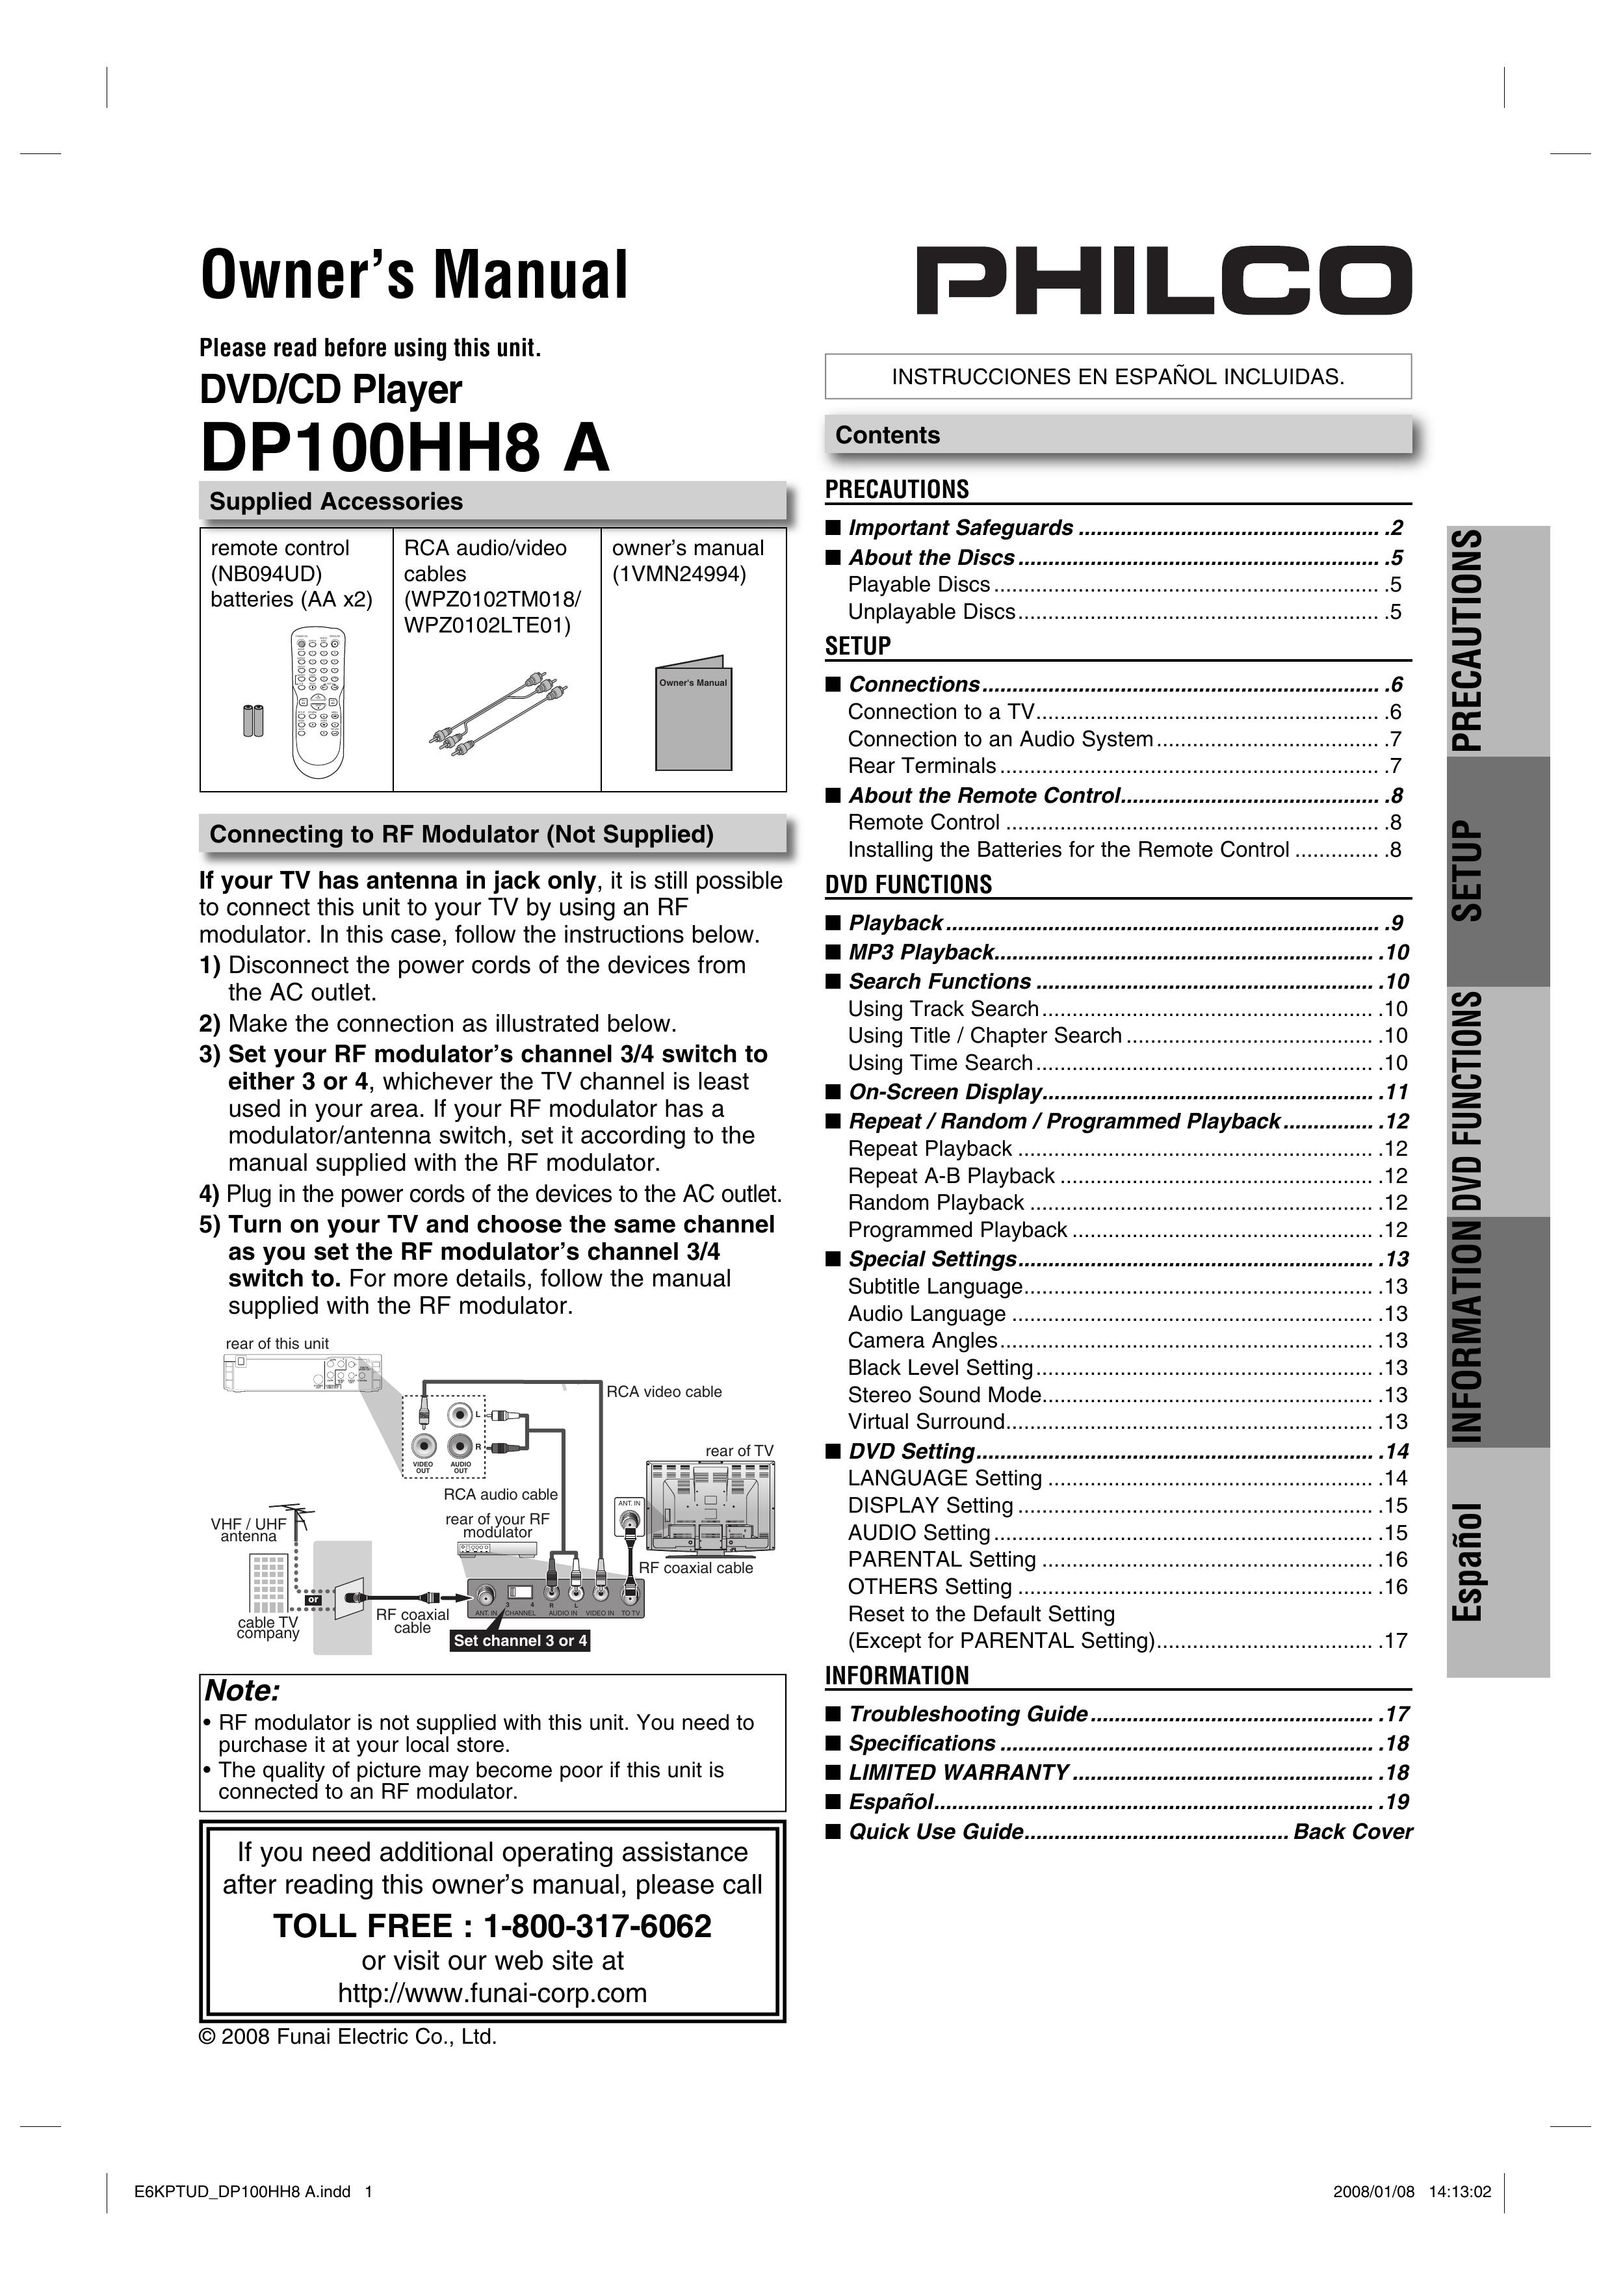 FUNAI DP100HH8A CD Player User Manual (Page 1)